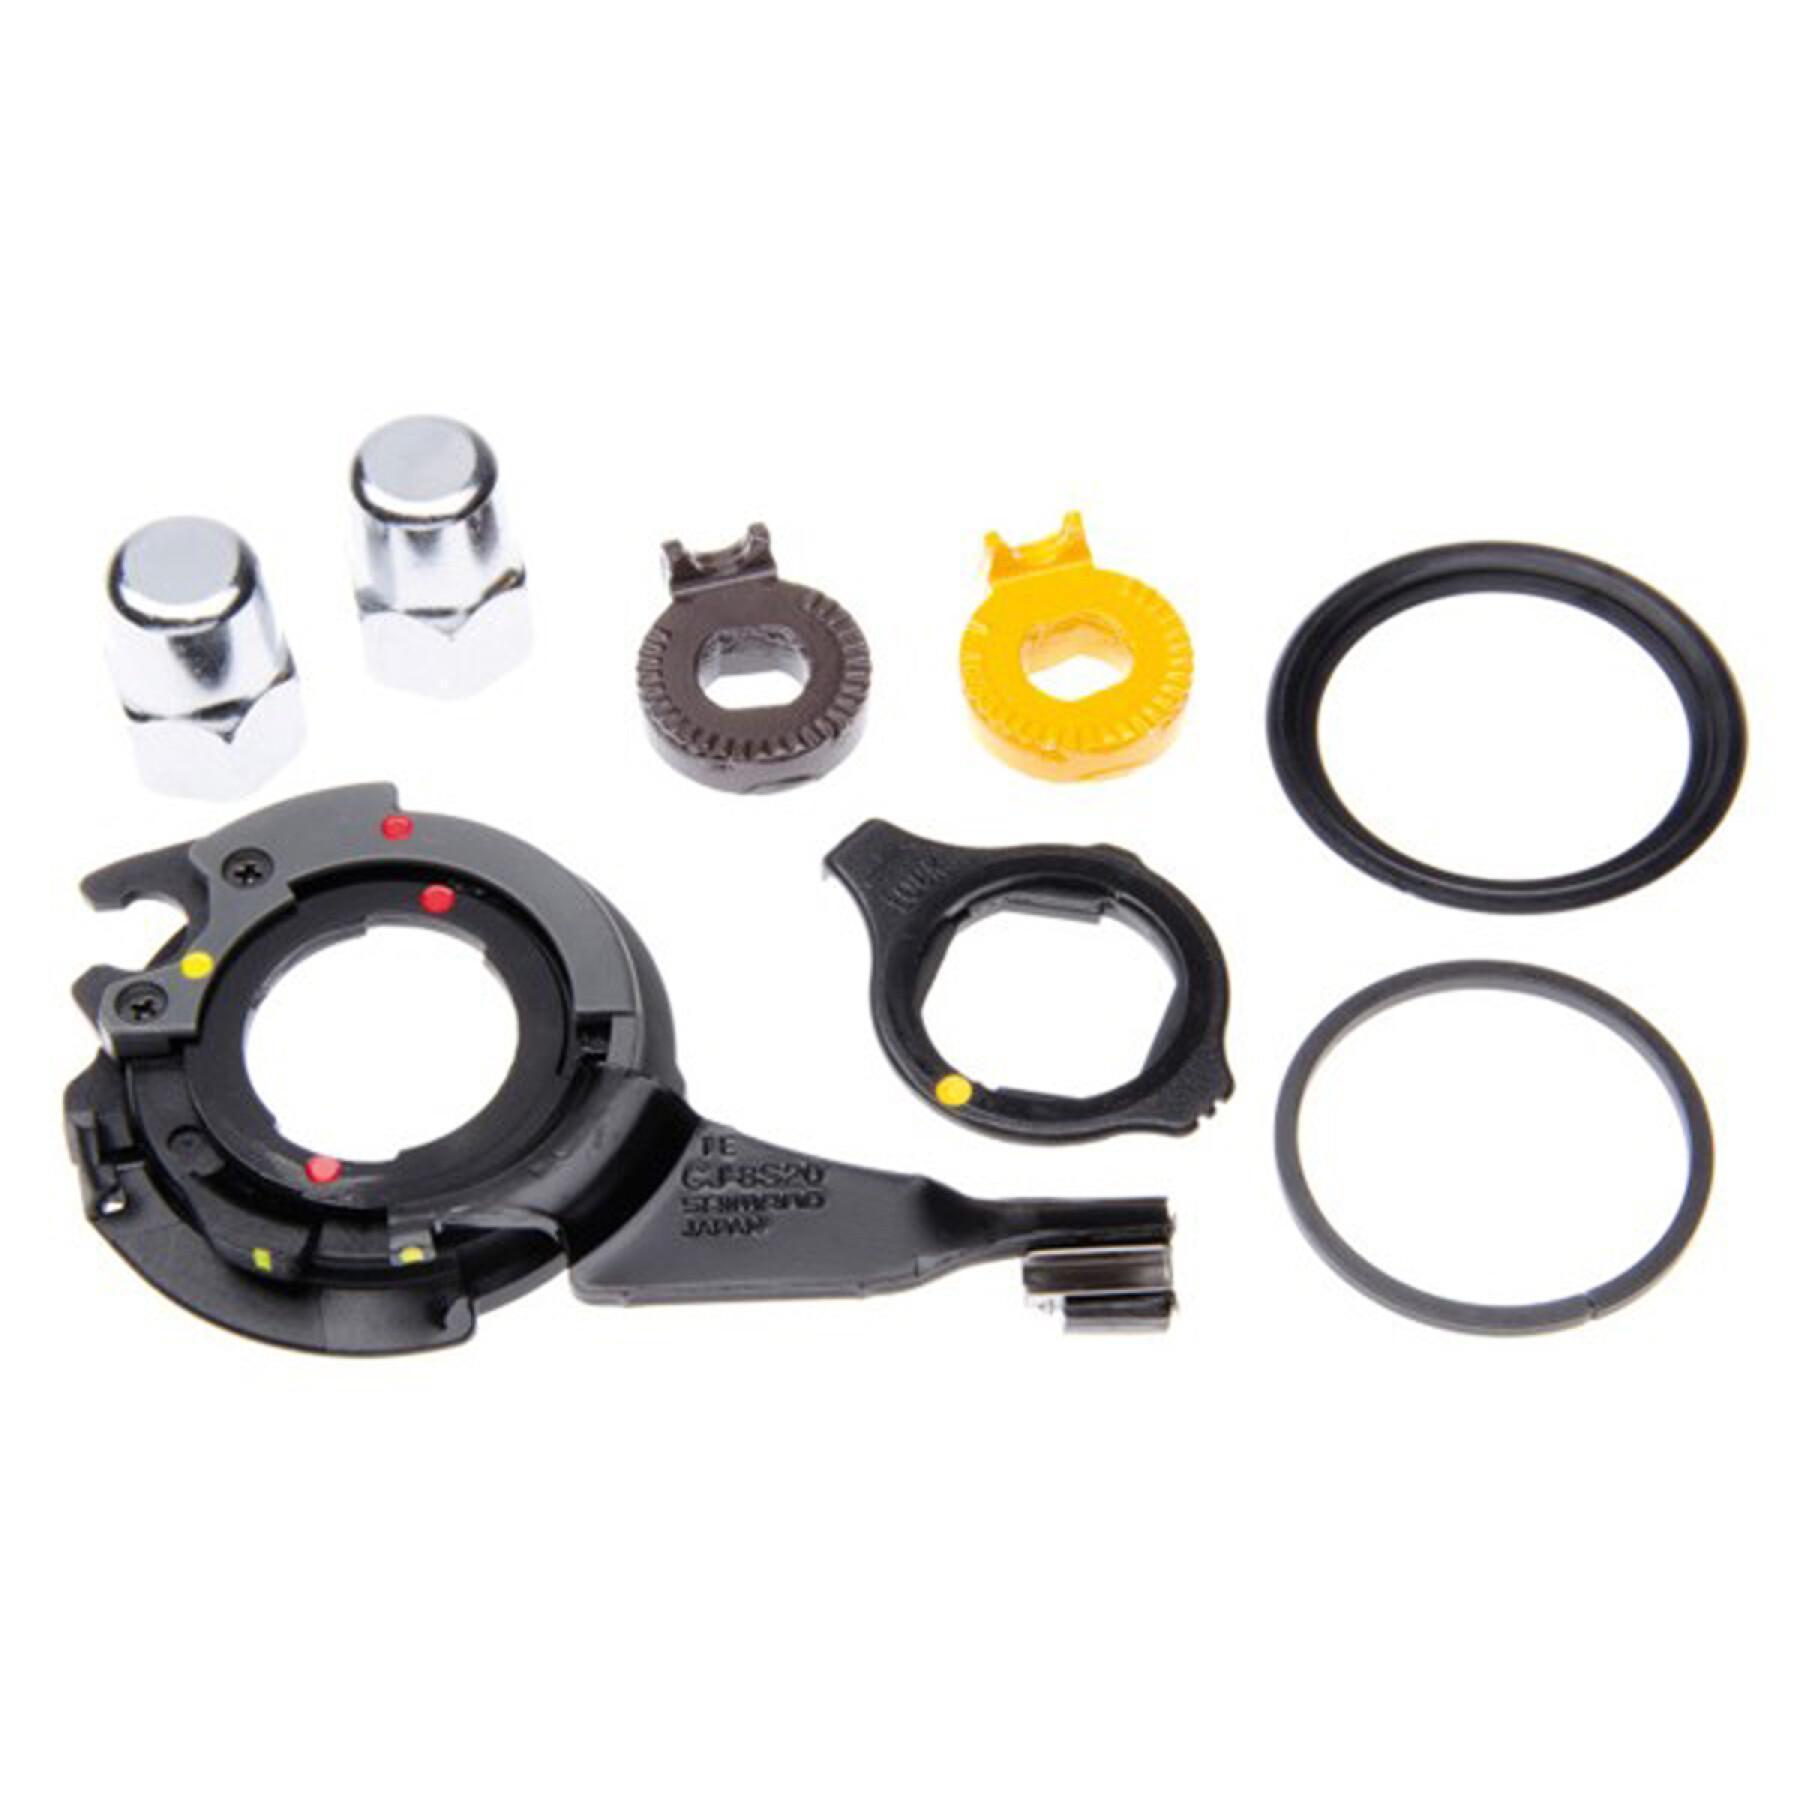 Integrated gear hub parts for 11/8/7/5v cap nut Shimano Nexus SM-8S31